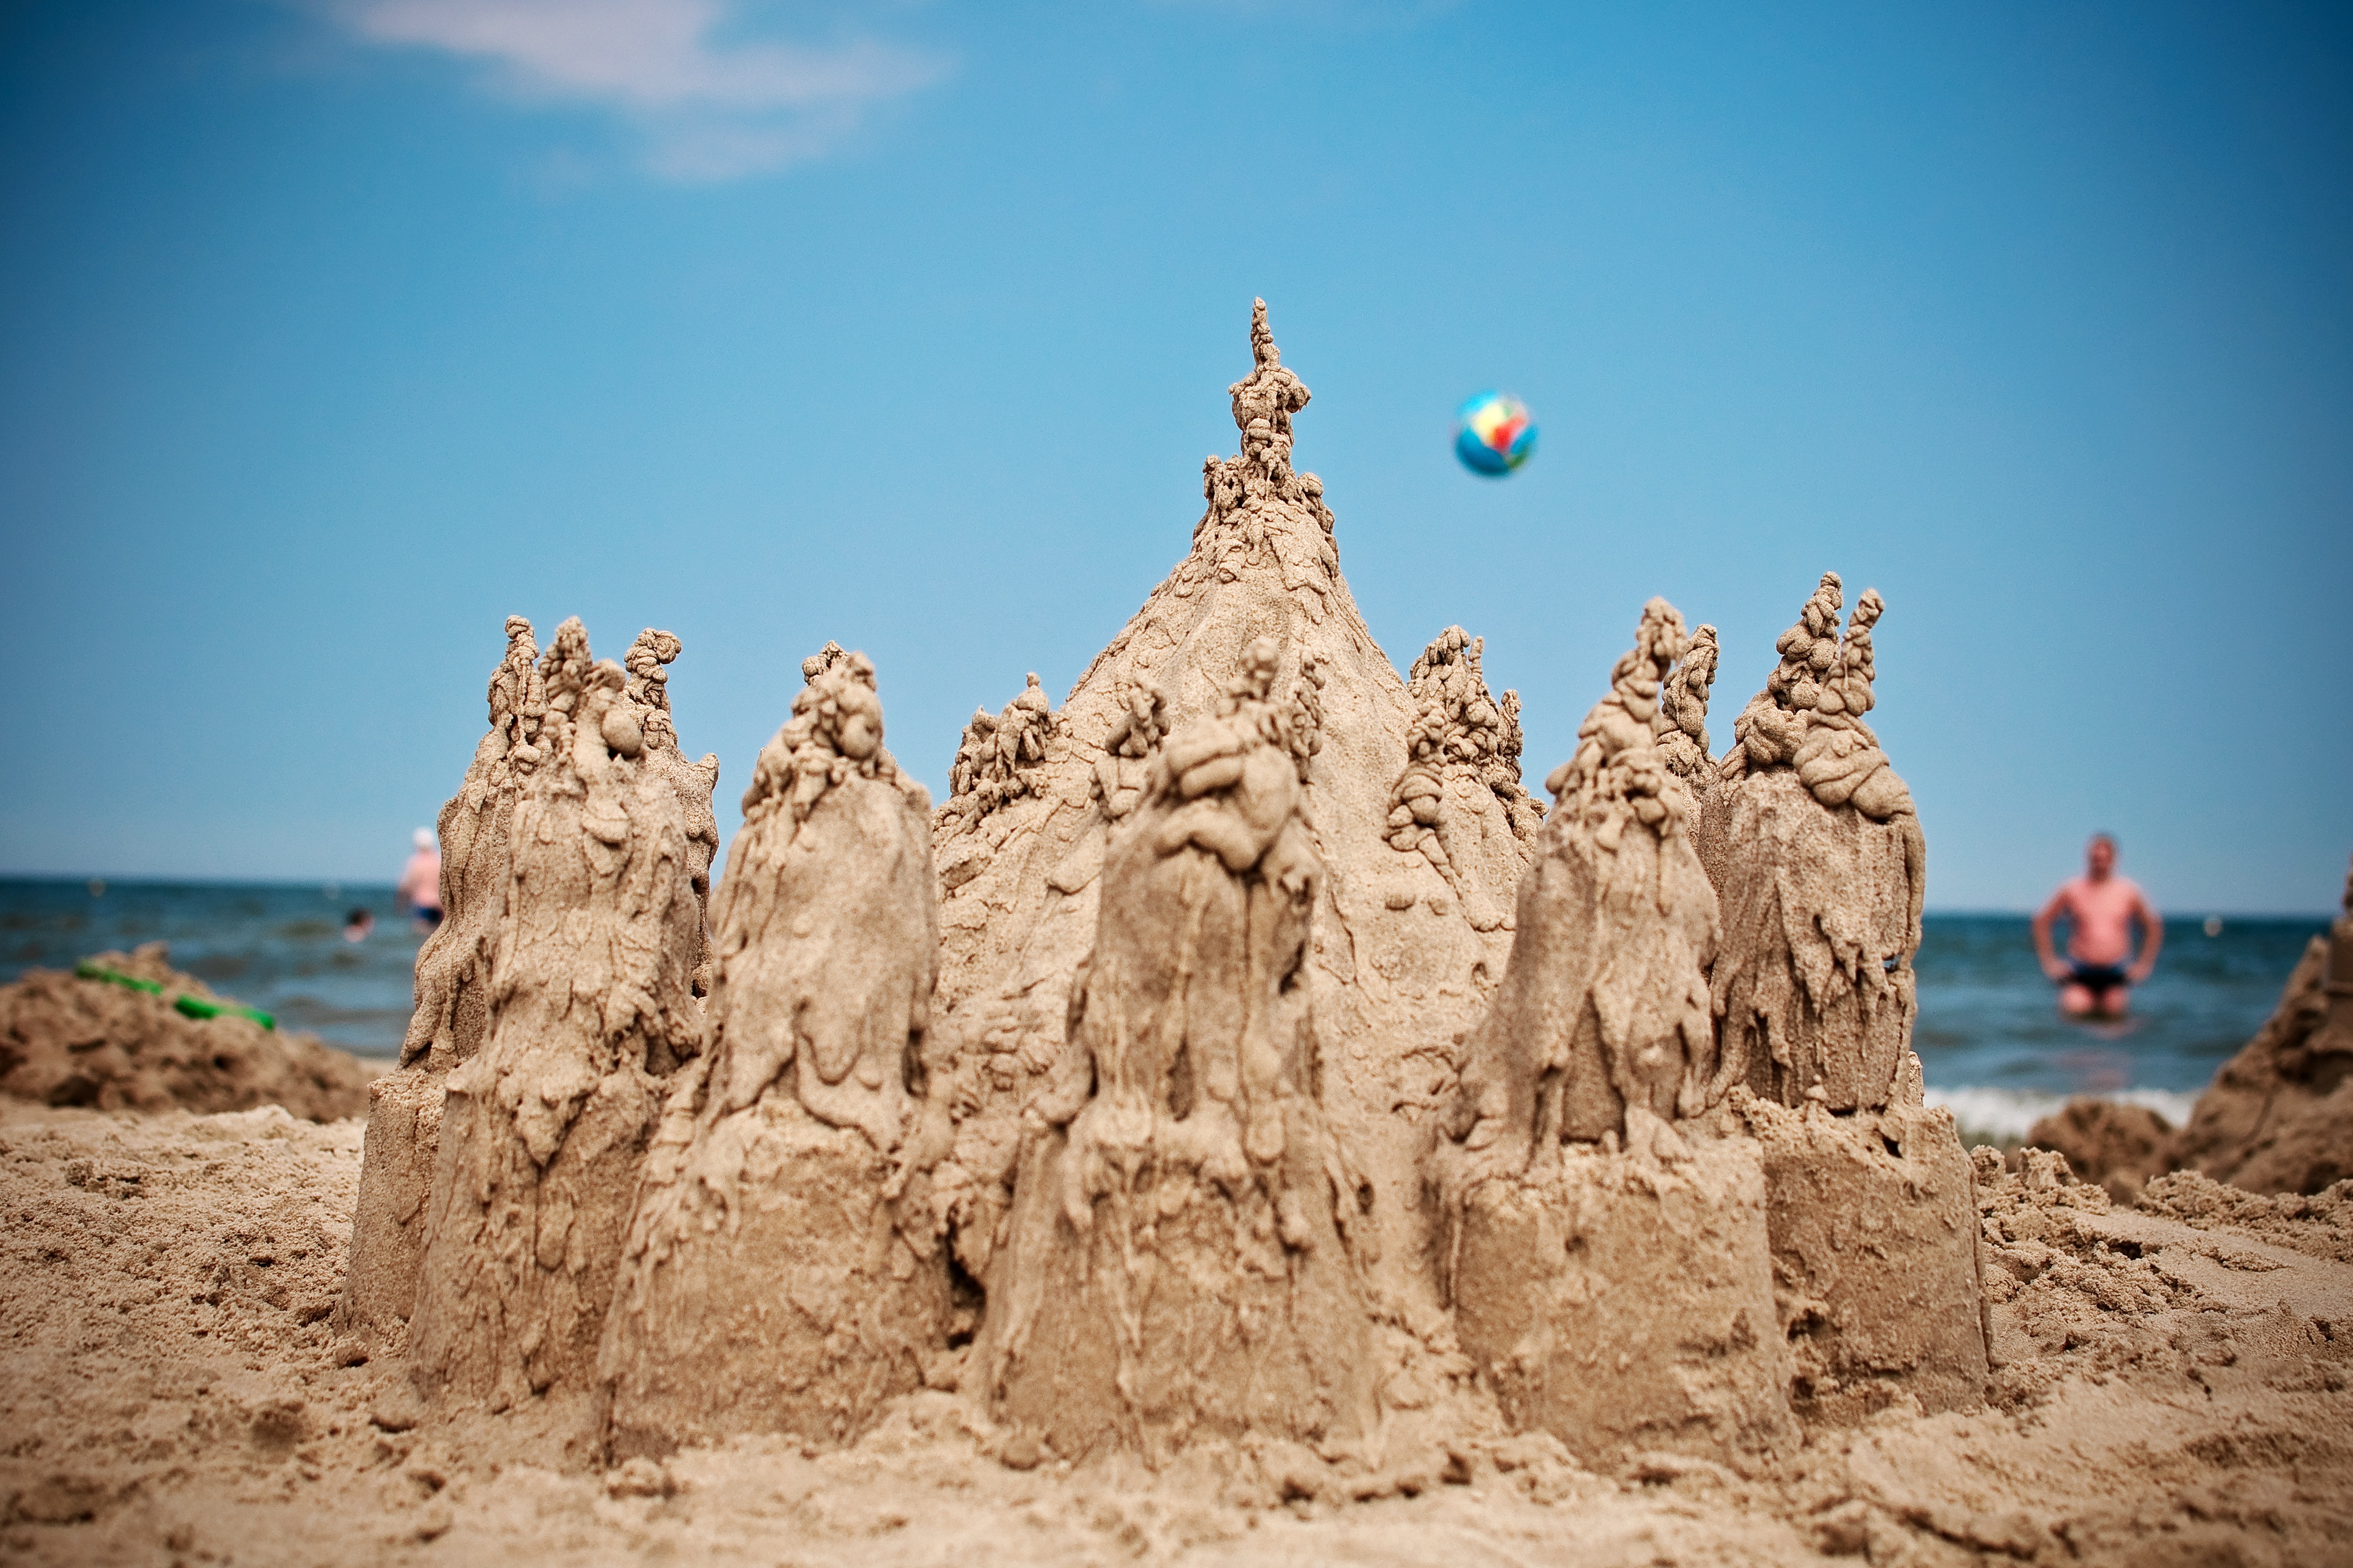 Sandcastle picture. Корсика песочный замок. Замок из песка на пляже. Красивый замок из песка. Песочный замок у моря.